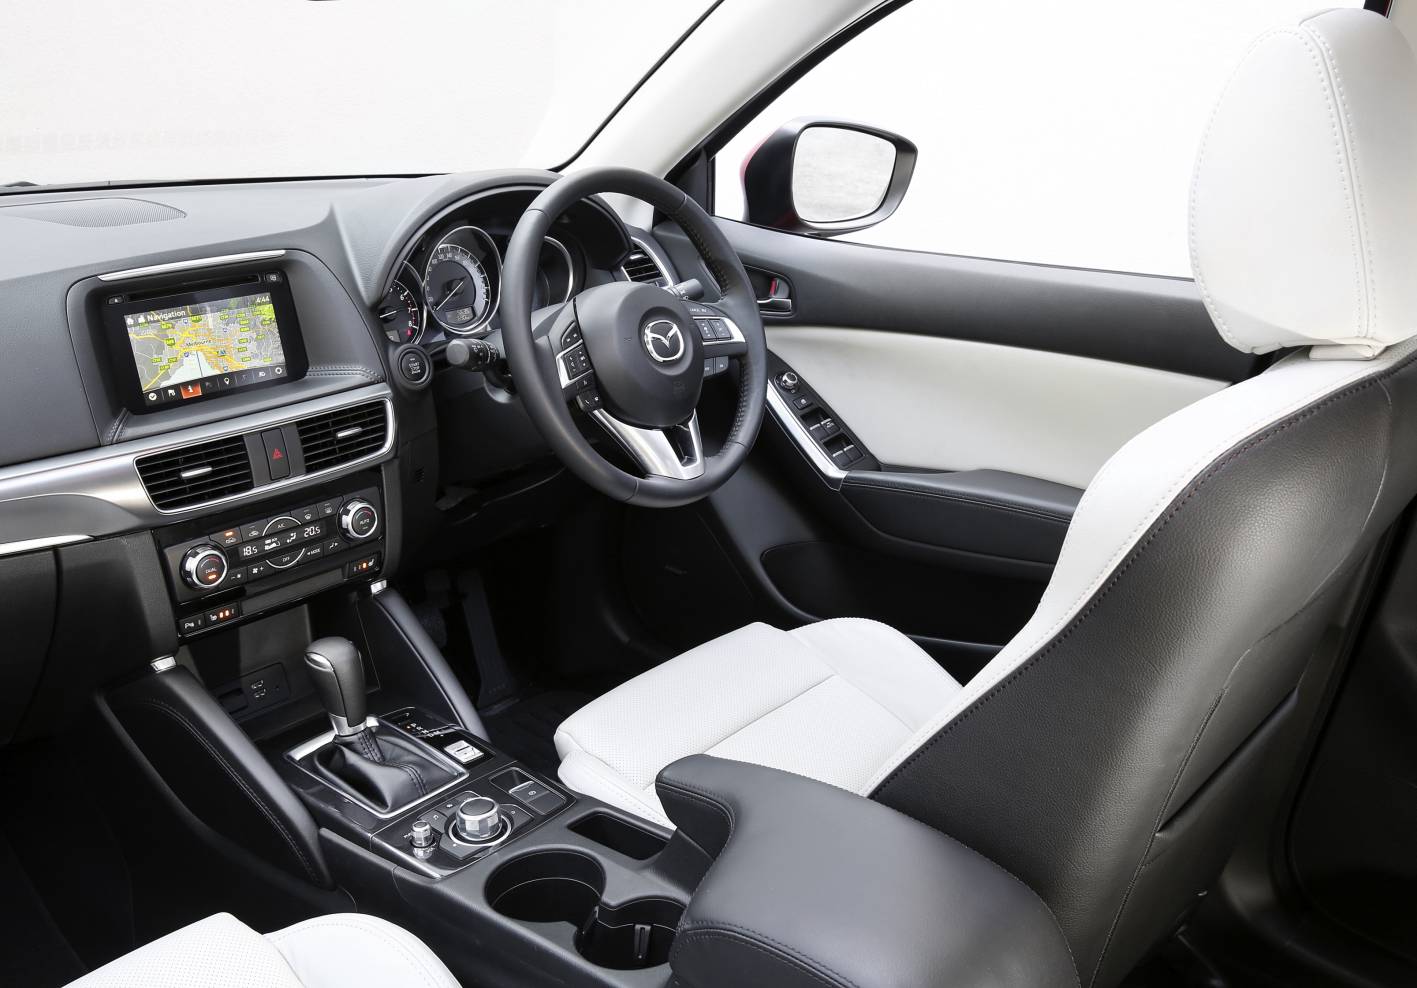 2015 Mazda CX-5 on sale in Australia from $27,190 | PerformanceDrive